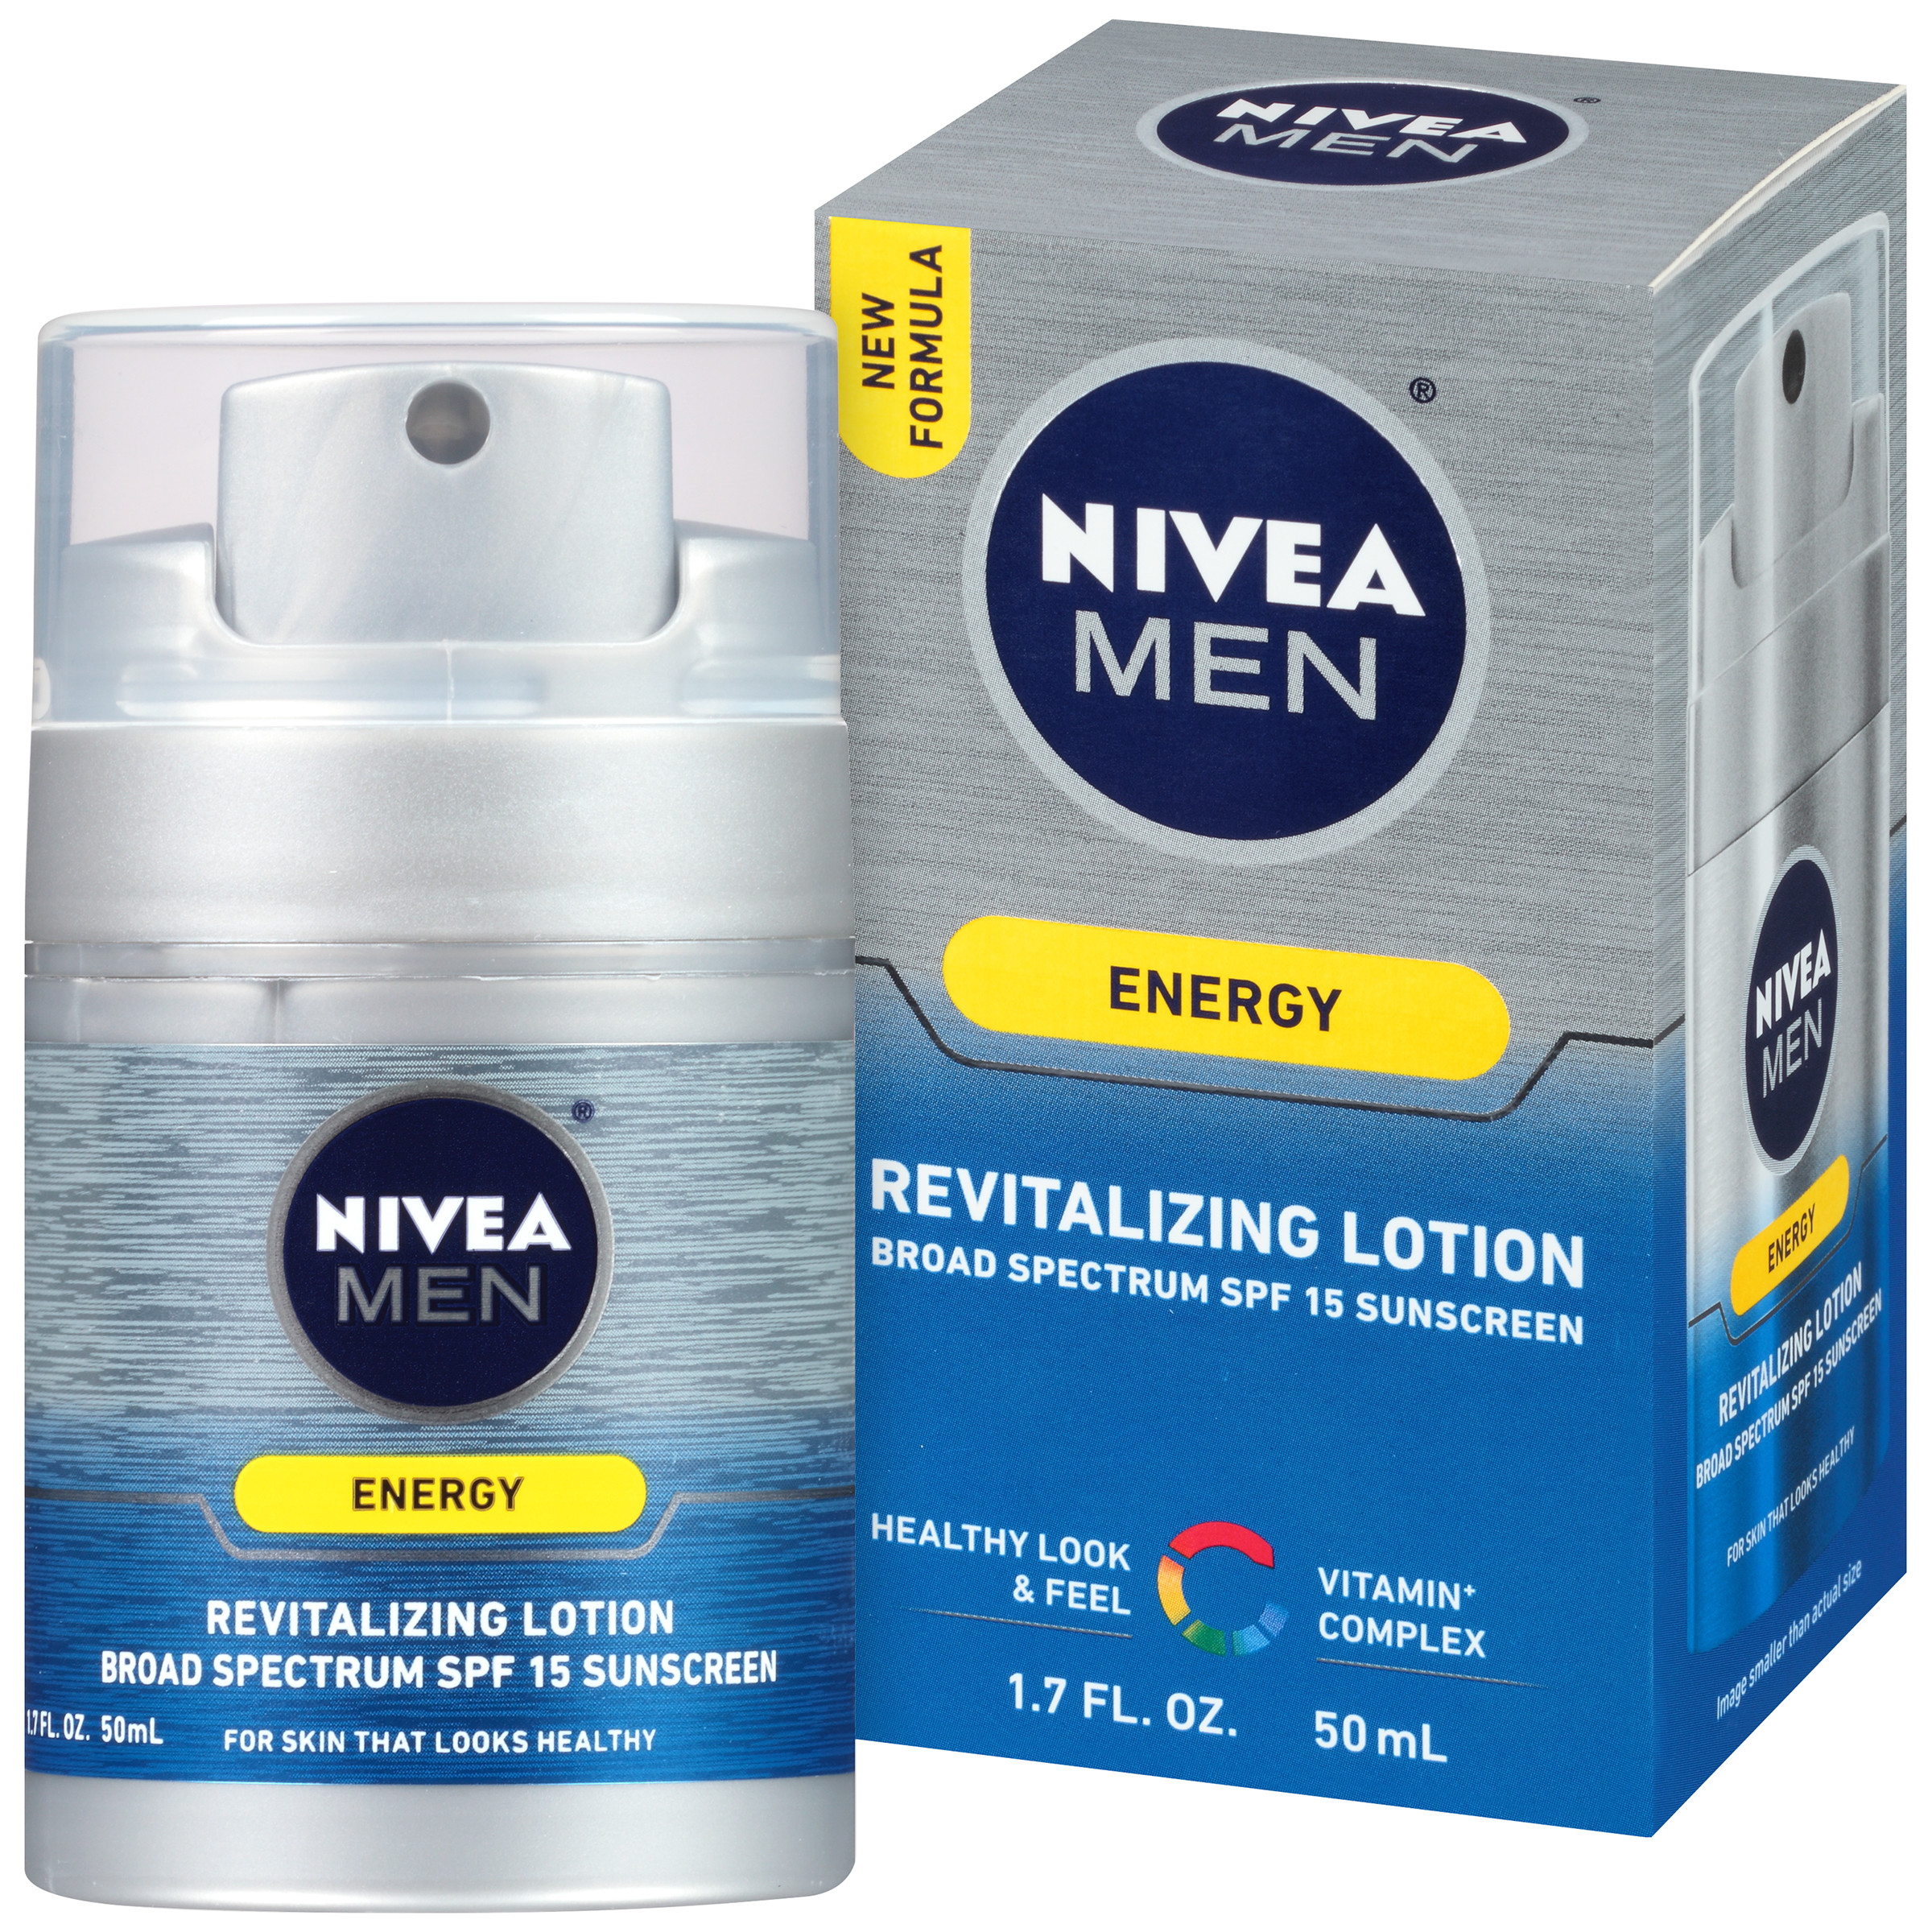 NIVEA Men Energy Lotion Broad Spectrum SPF 15 Sunscreen, 1.7 fl. oz. Bottle - image 1 of 4